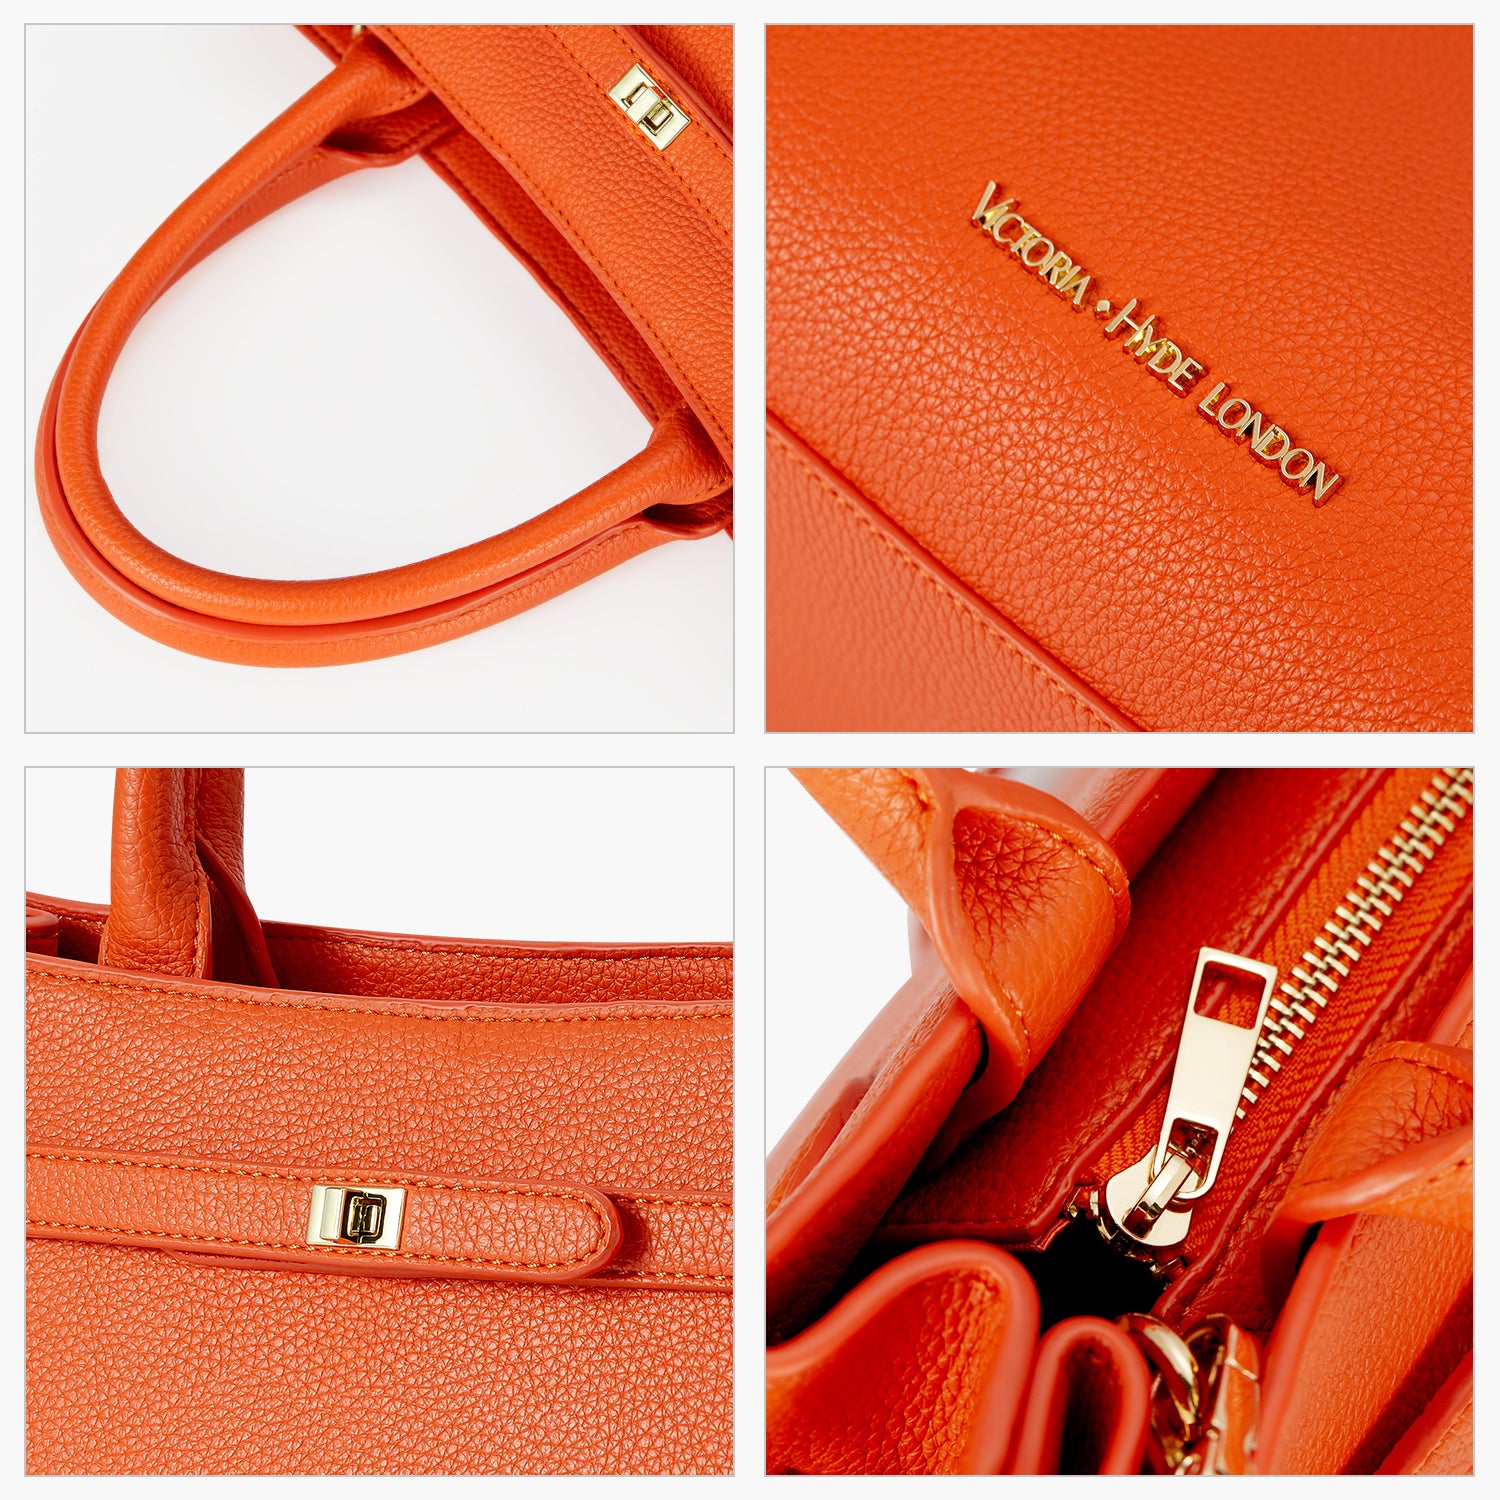 VICTORIA HYDE LONDON Lambeth Designer Handbags for Women Crossbody Tote Satchel Luxury Business Top Handle Bags for Women